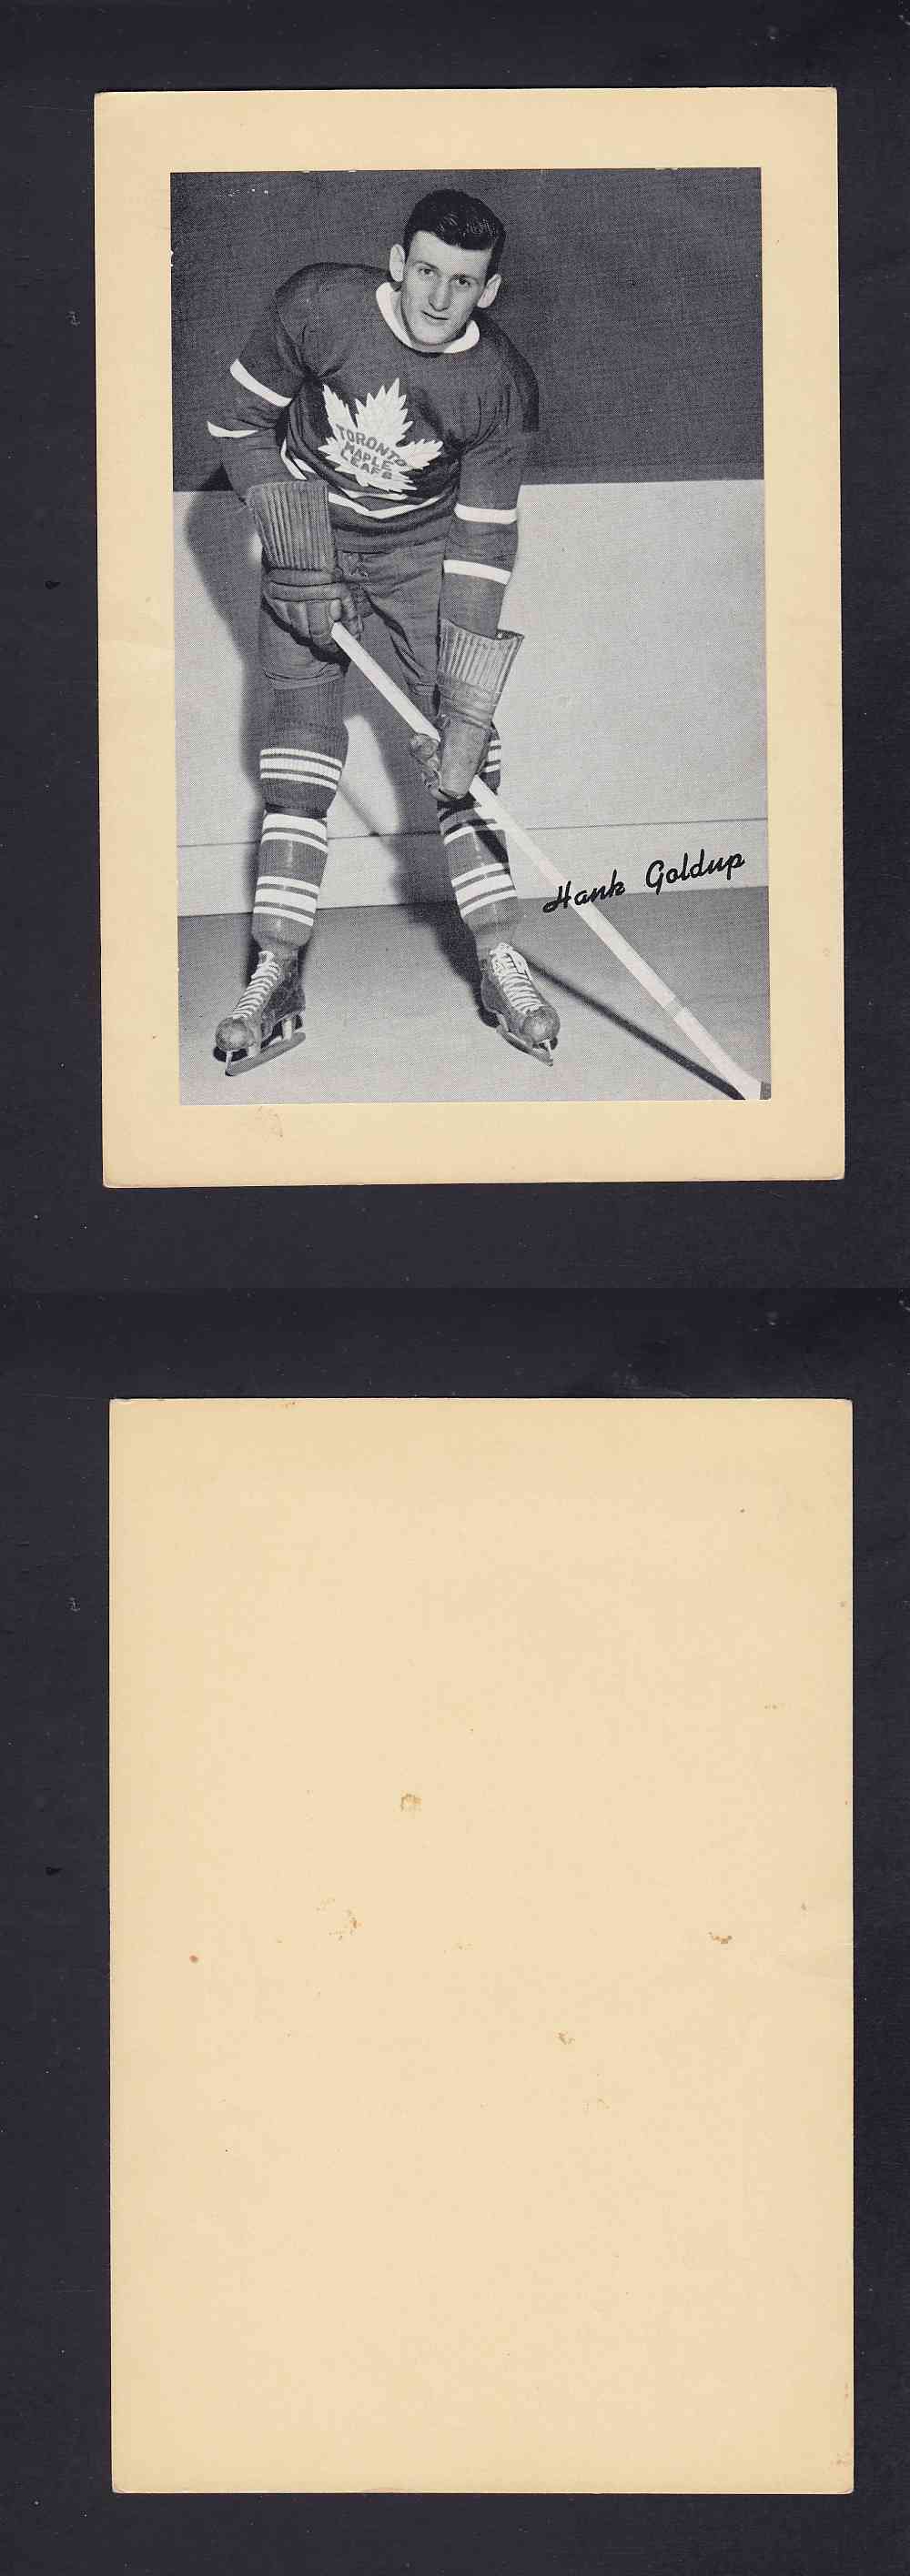 1934-43 BEEHIVE PHOTO GR.1 H. GOLDUP photo